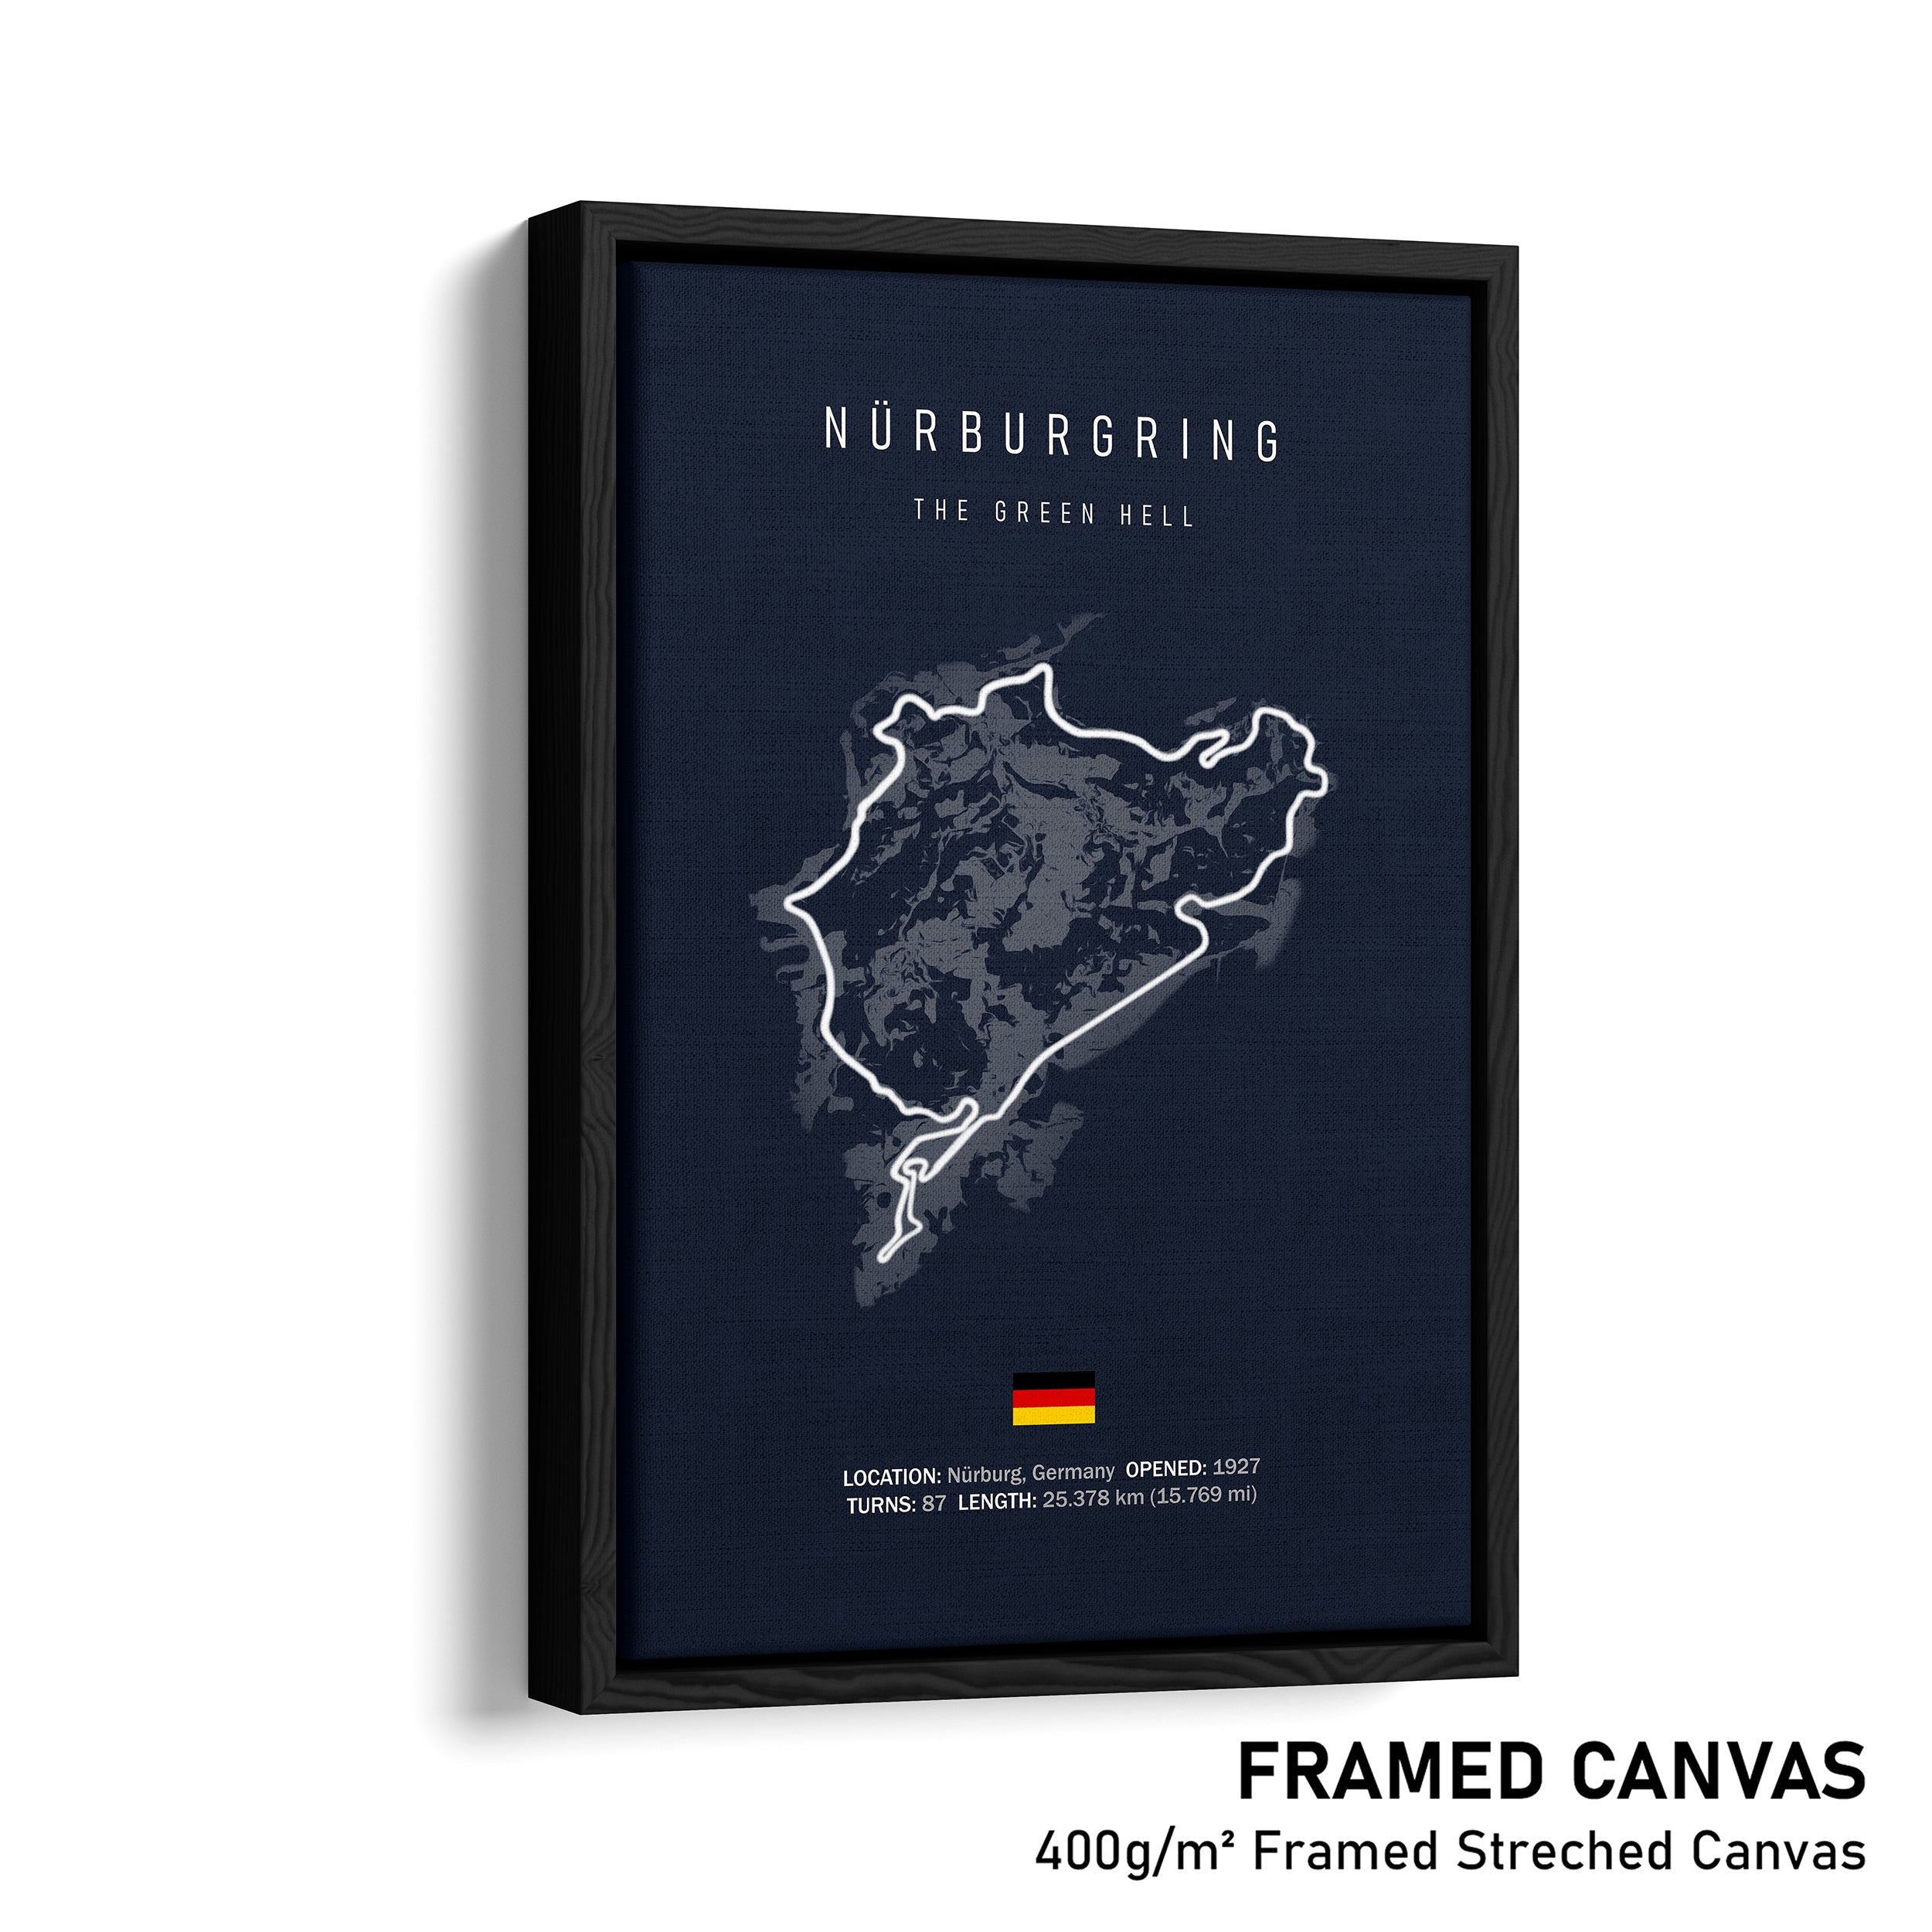 Nürburgring (Nordschleife + Grand Prix Circuit) - Racetrack Framed Canvas Print